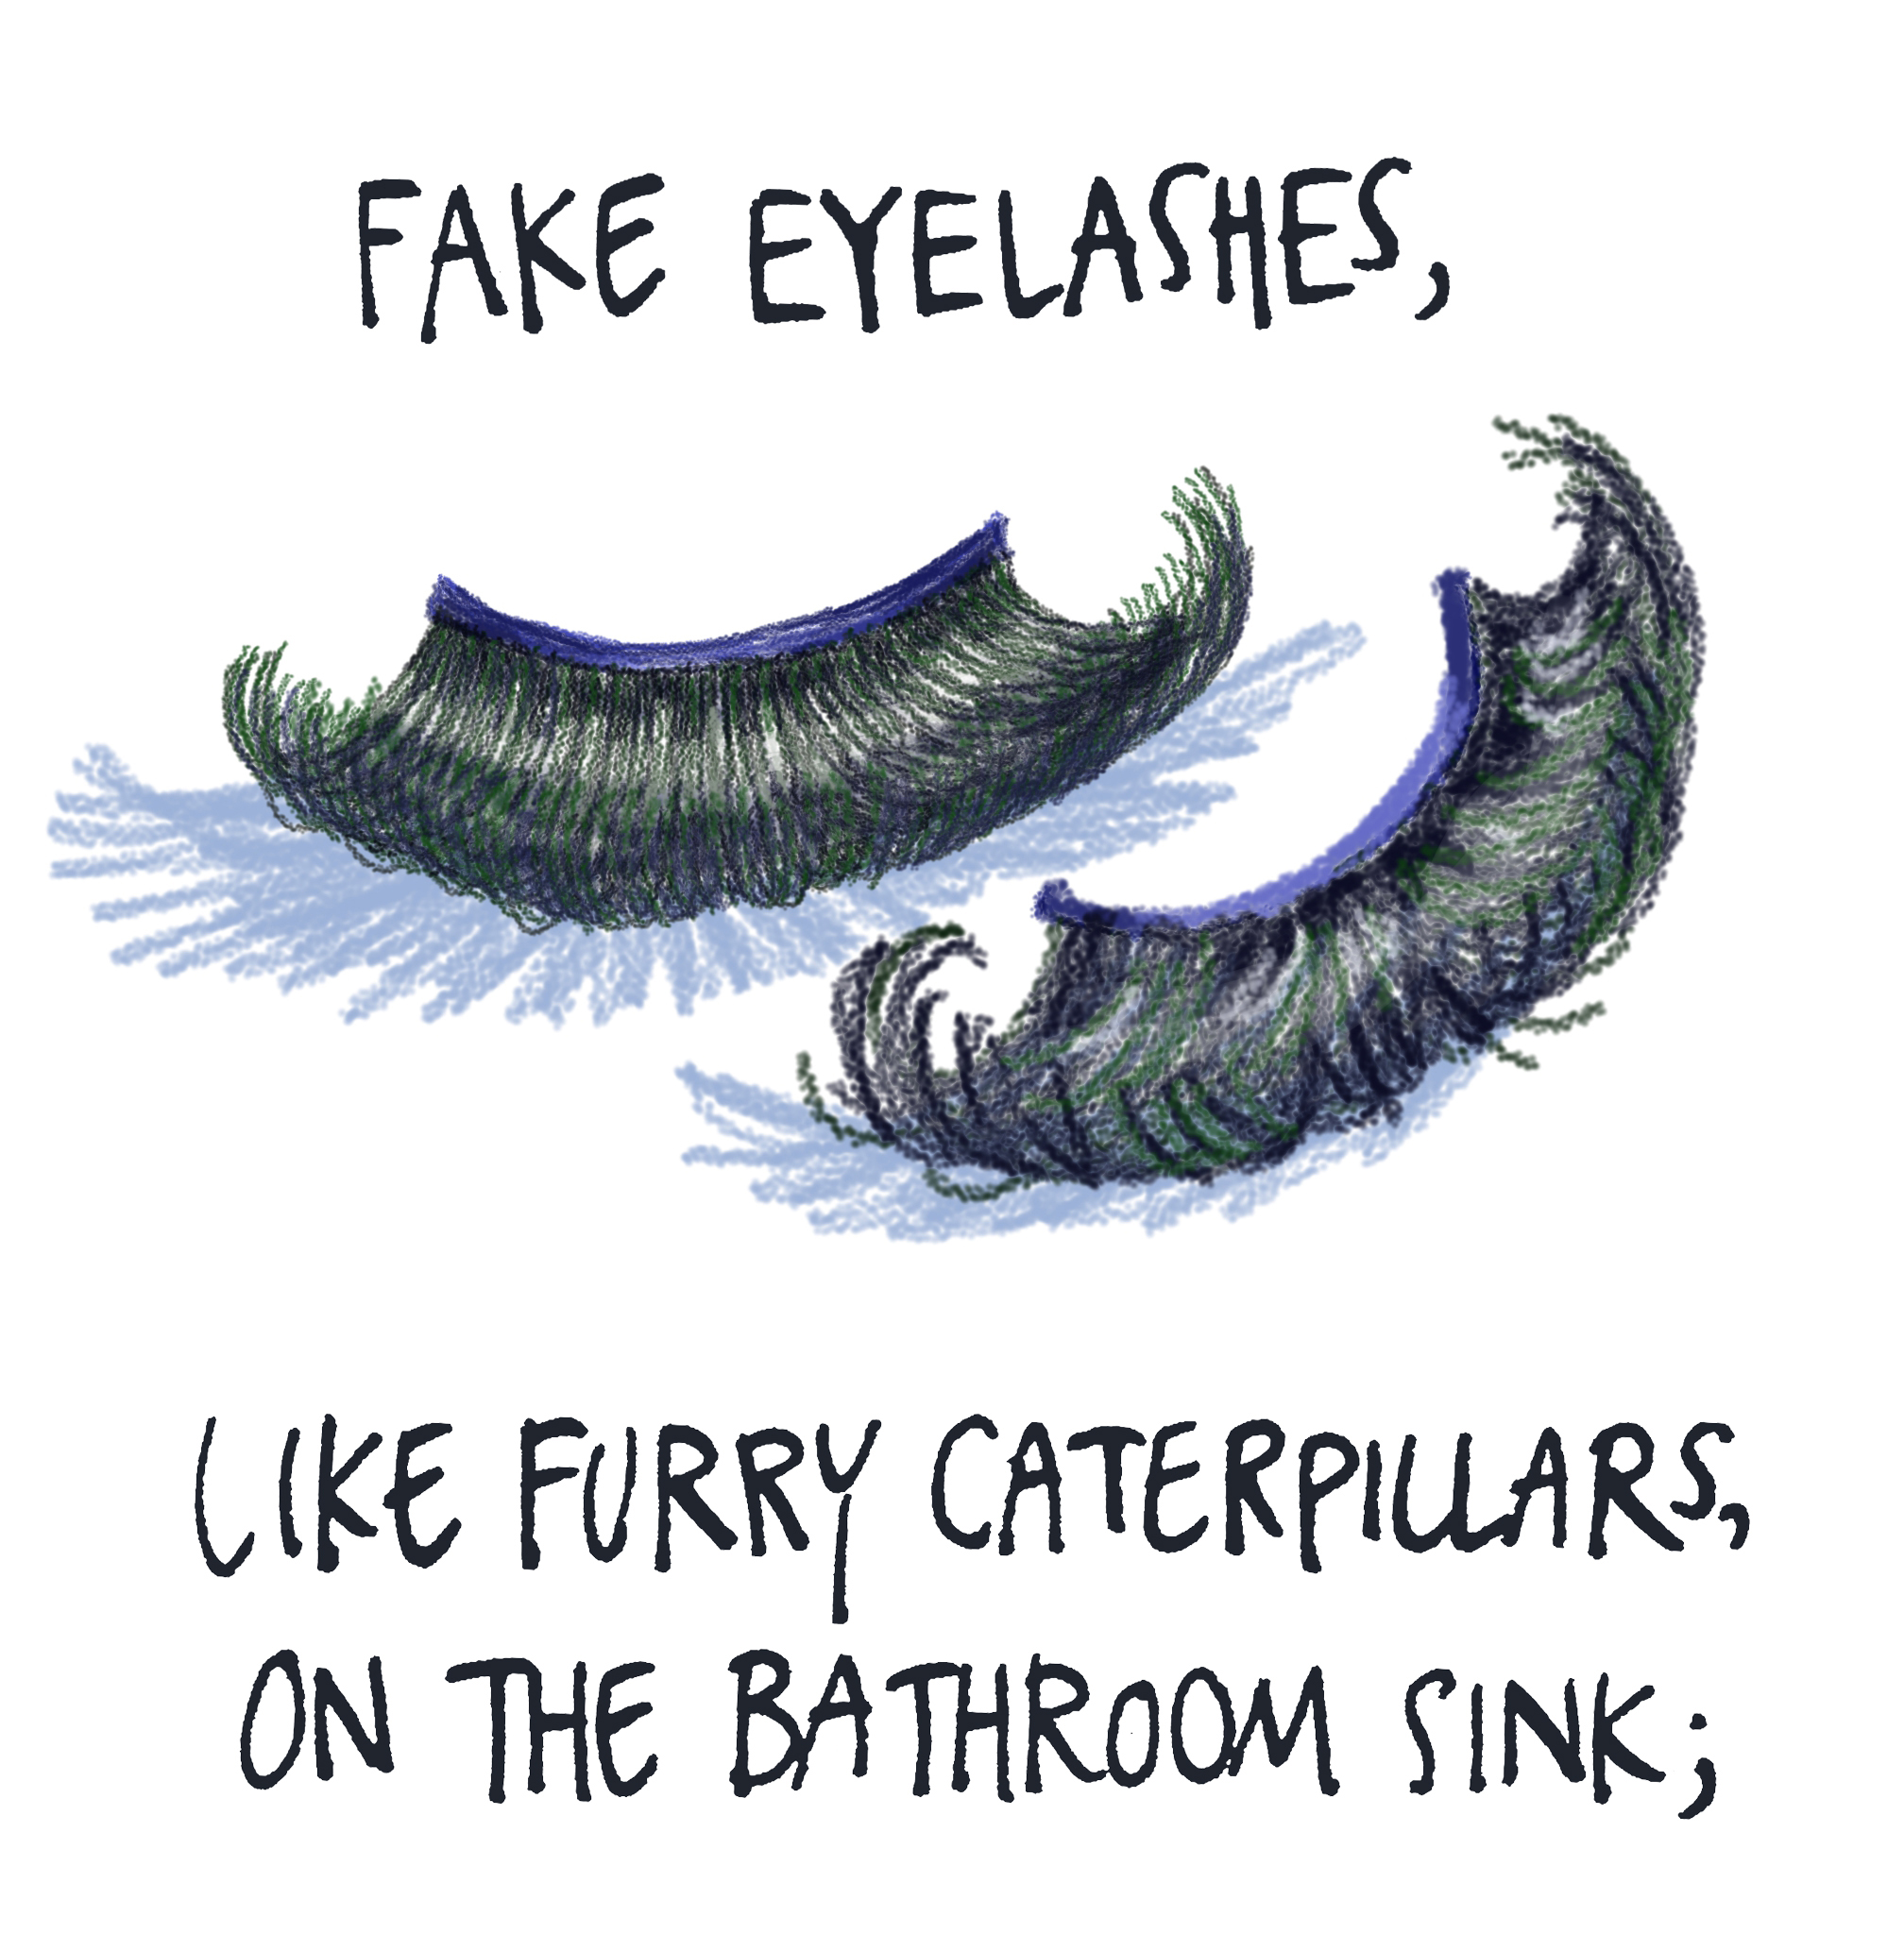 fake eyelashes, like furry caterpillars on the bathroom sink